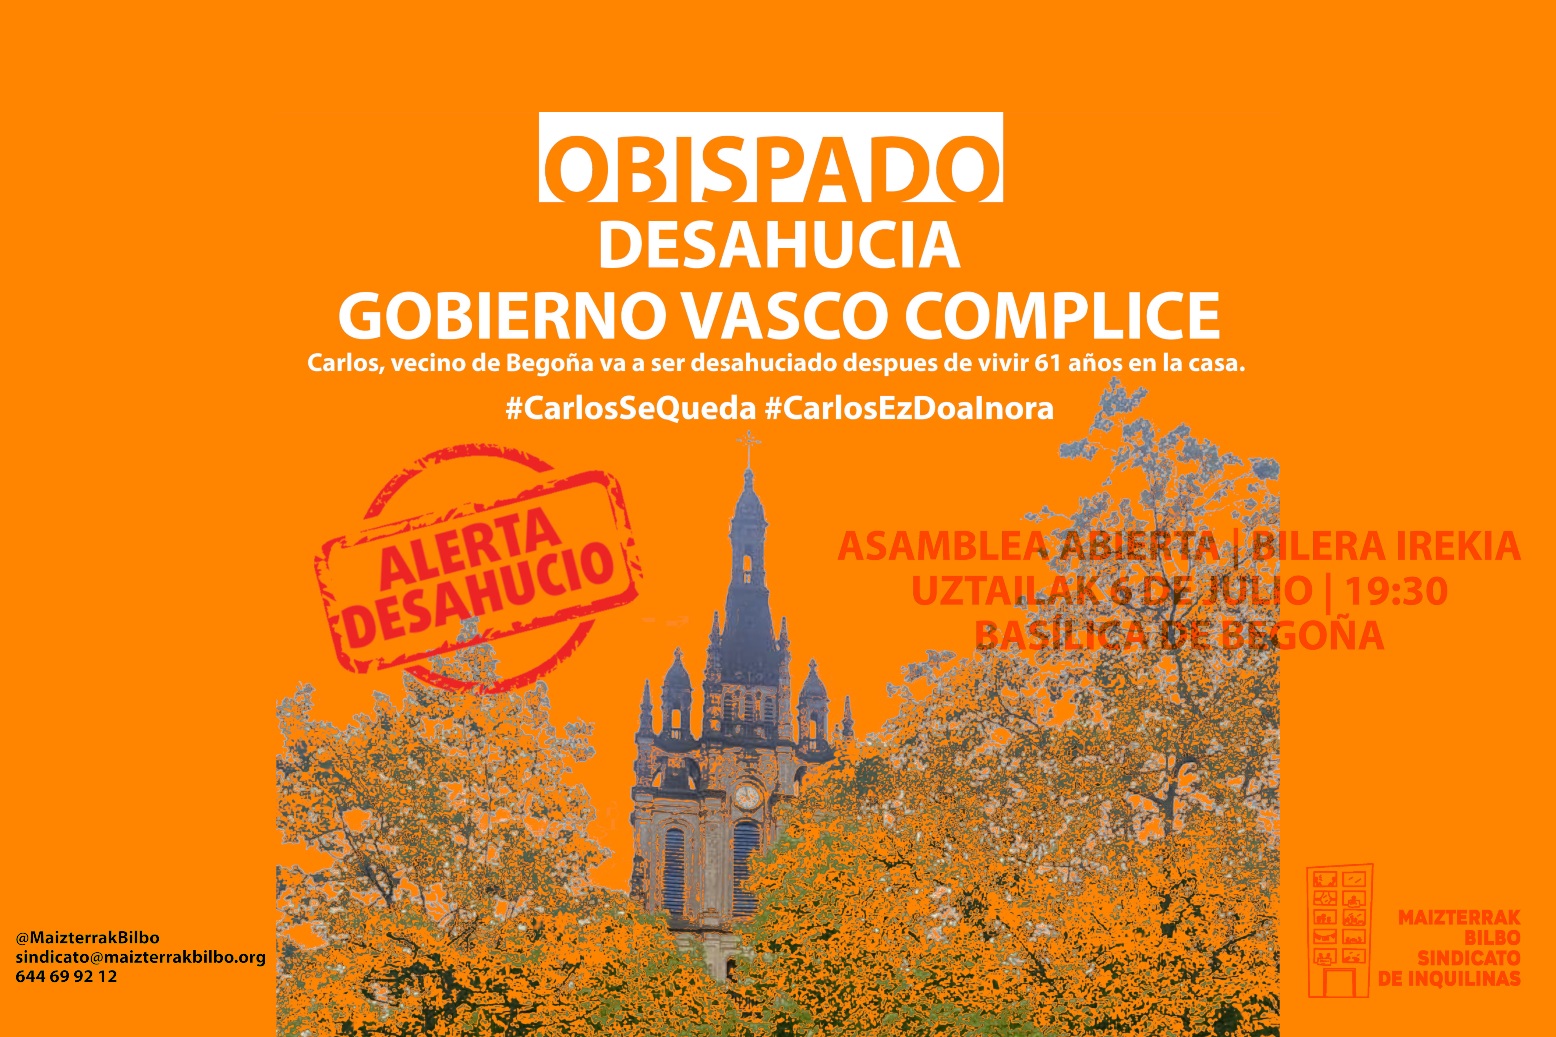 desahucio-bilbao-obispado-pensionista-casa-vivienda-calle-sindicato-inquilinas-maizterrak-begoña-iglesia-gobierno-vasco